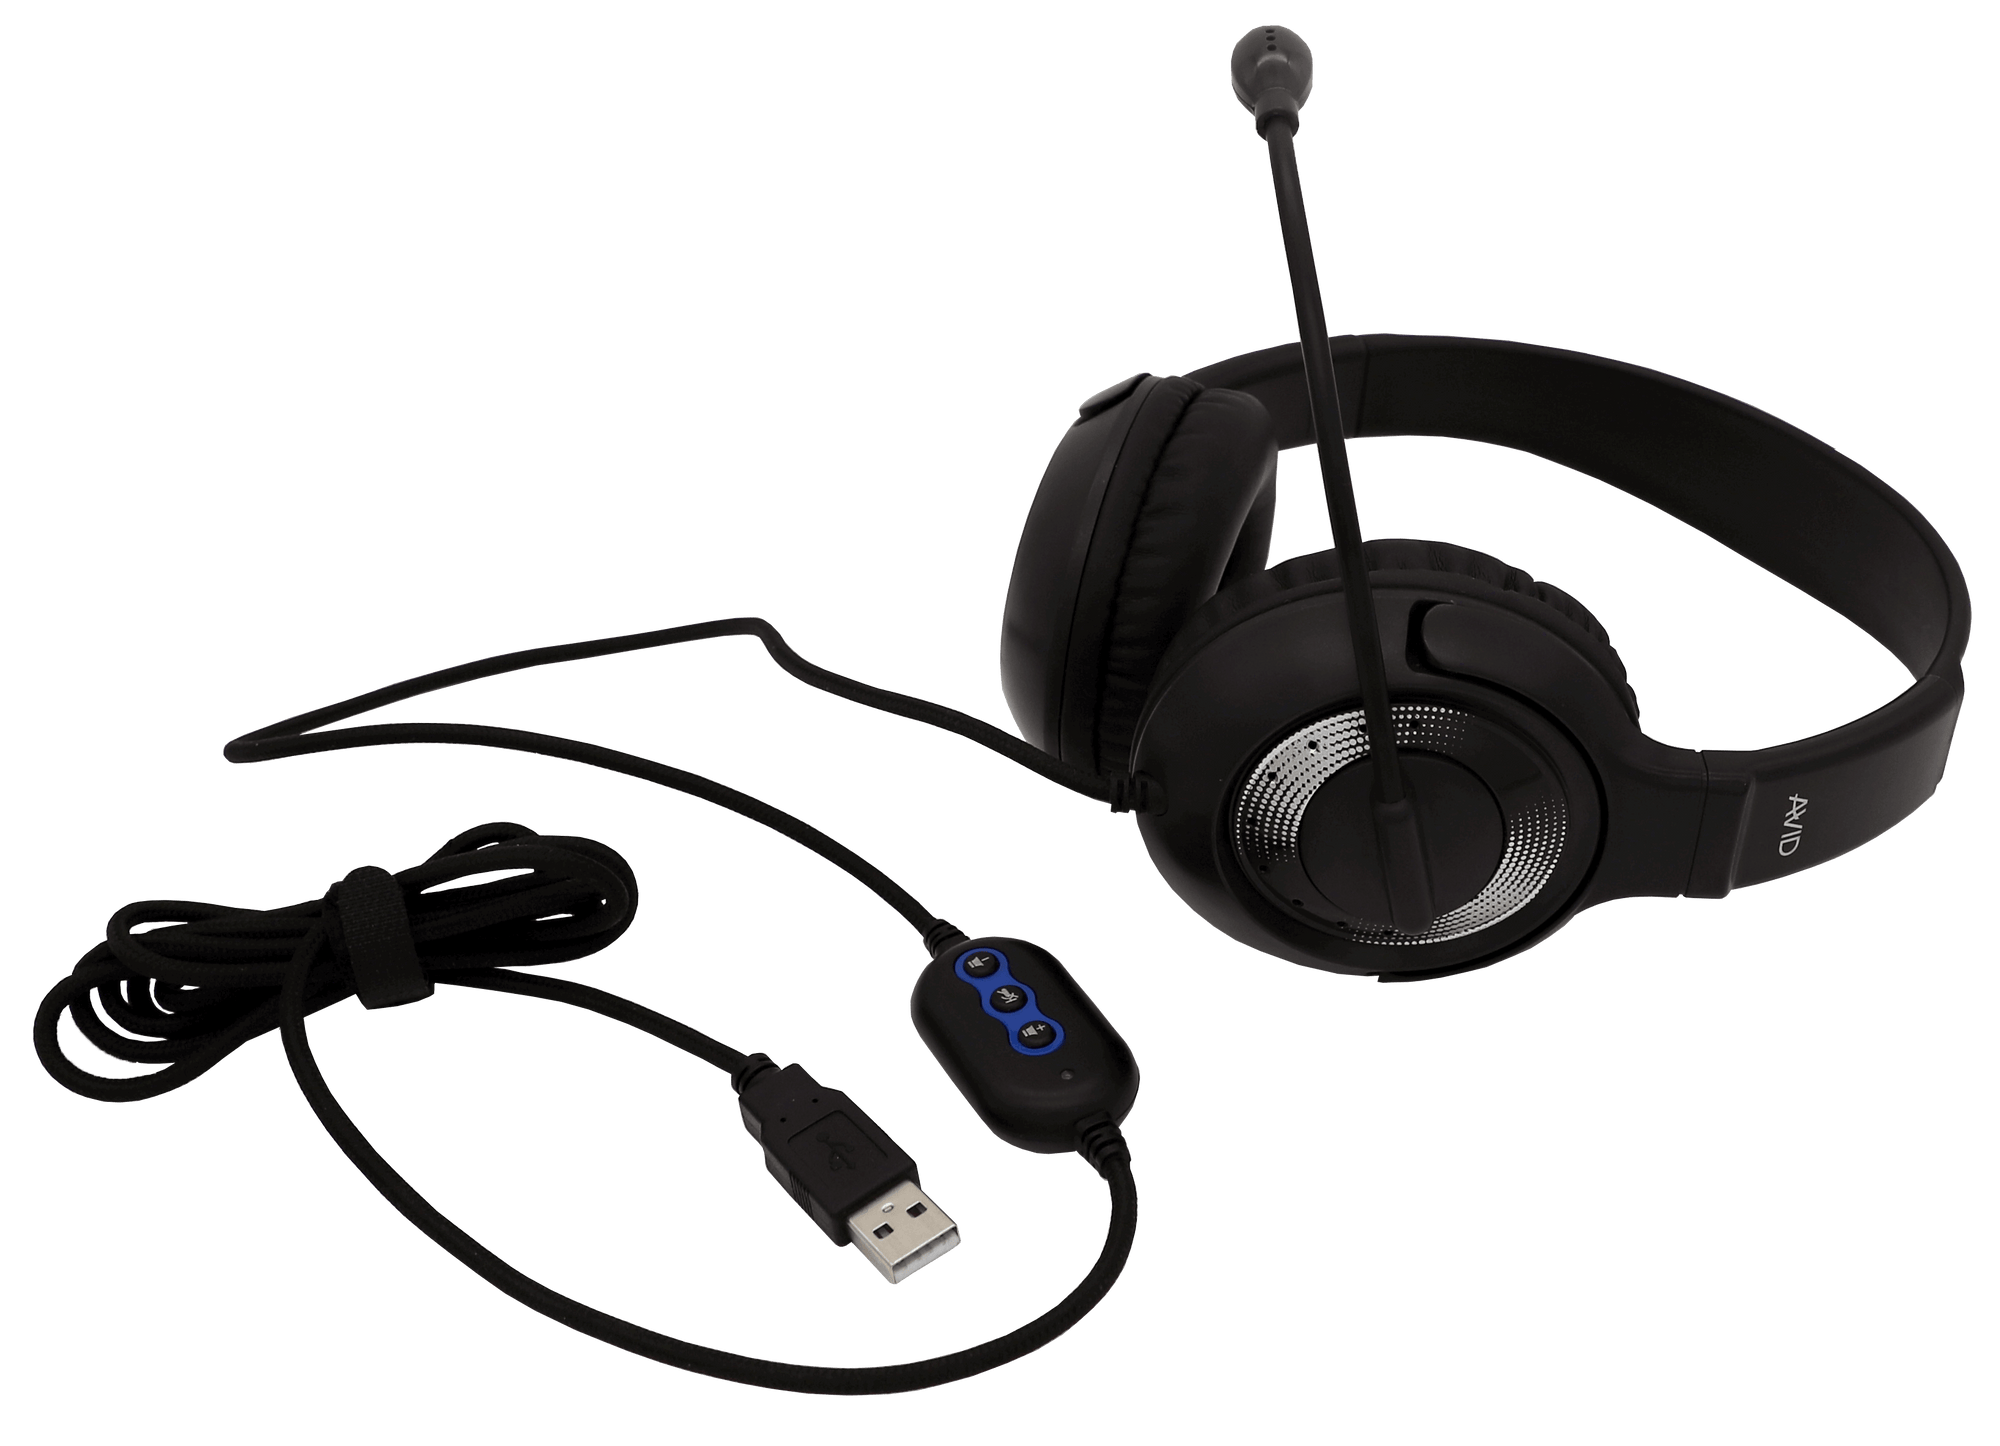 USB School Testing Headset (Black/Silver) - Learning Headphones